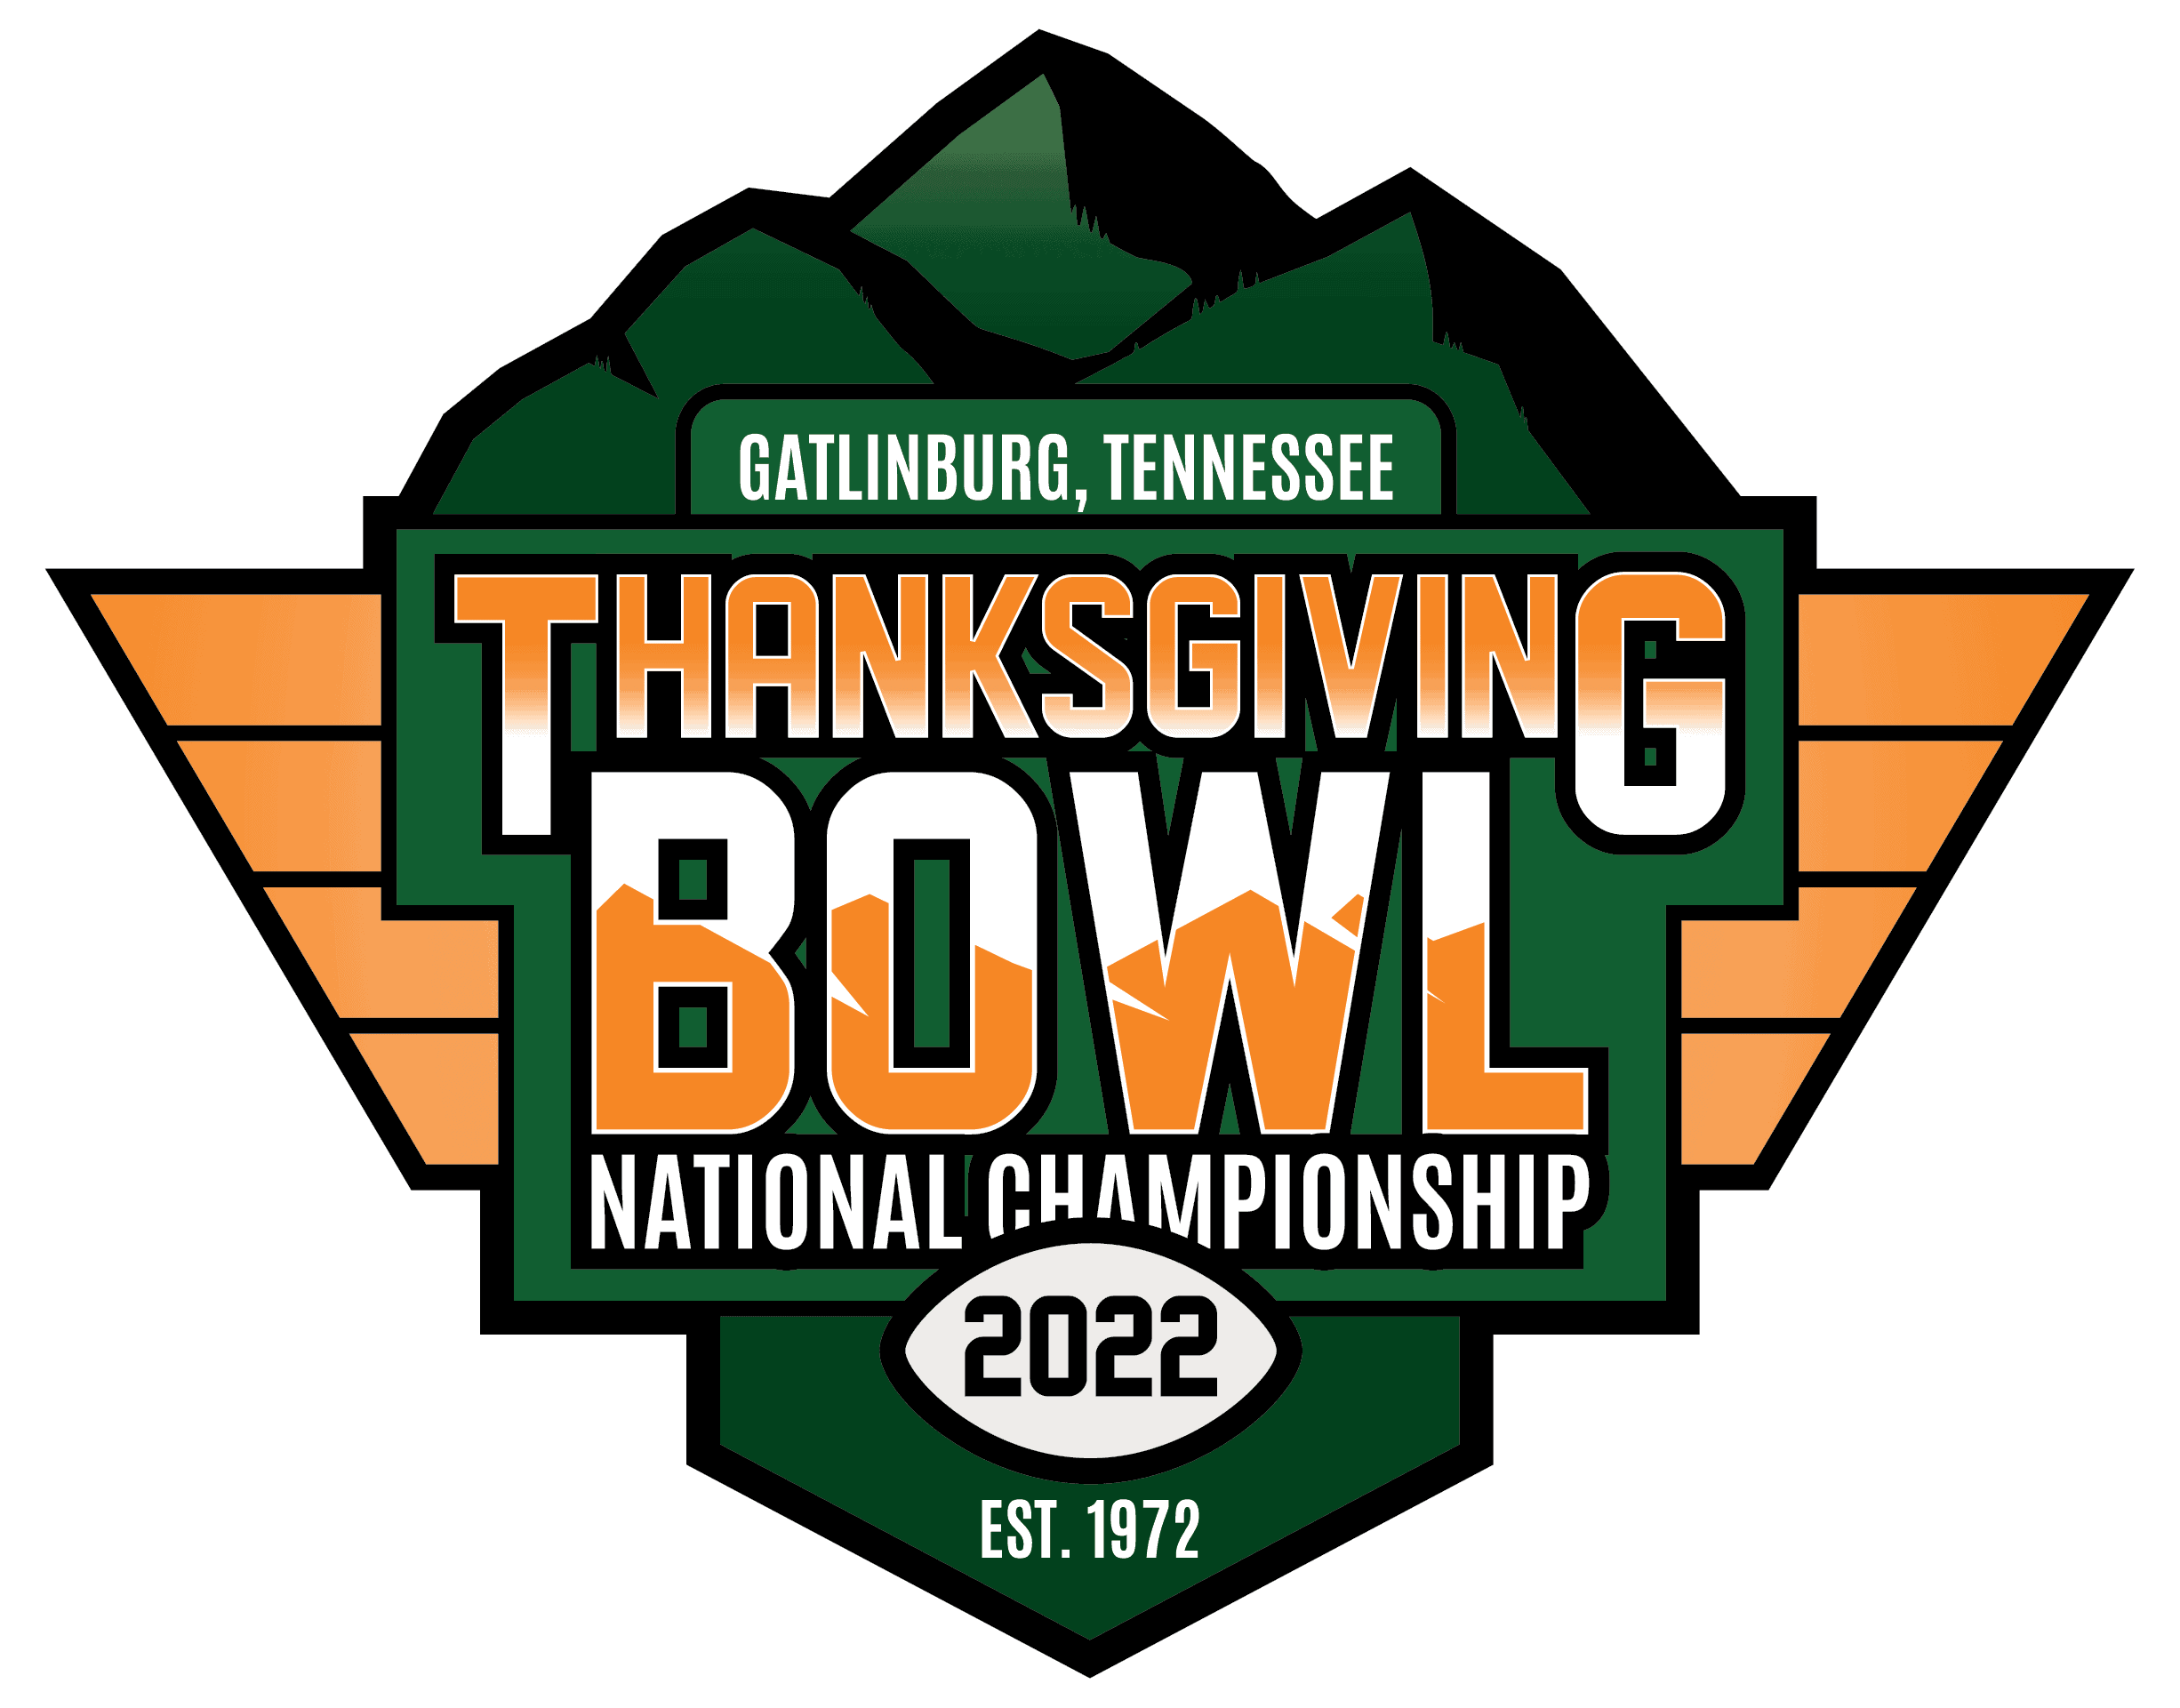 Thanksgiving Bowl National Championship logo